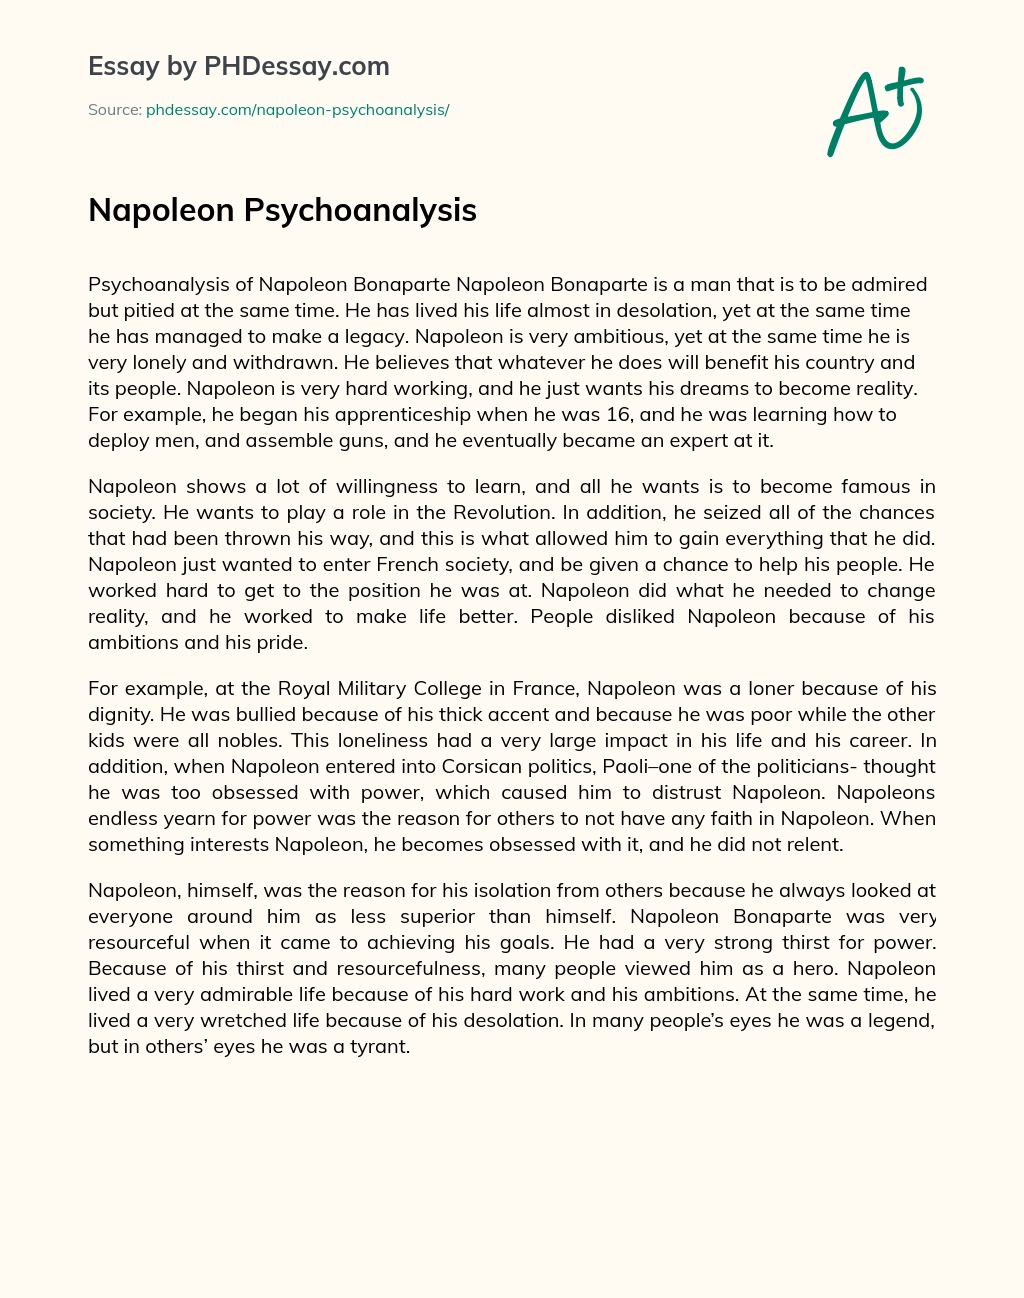 Napoleon Psychoanalysis essay